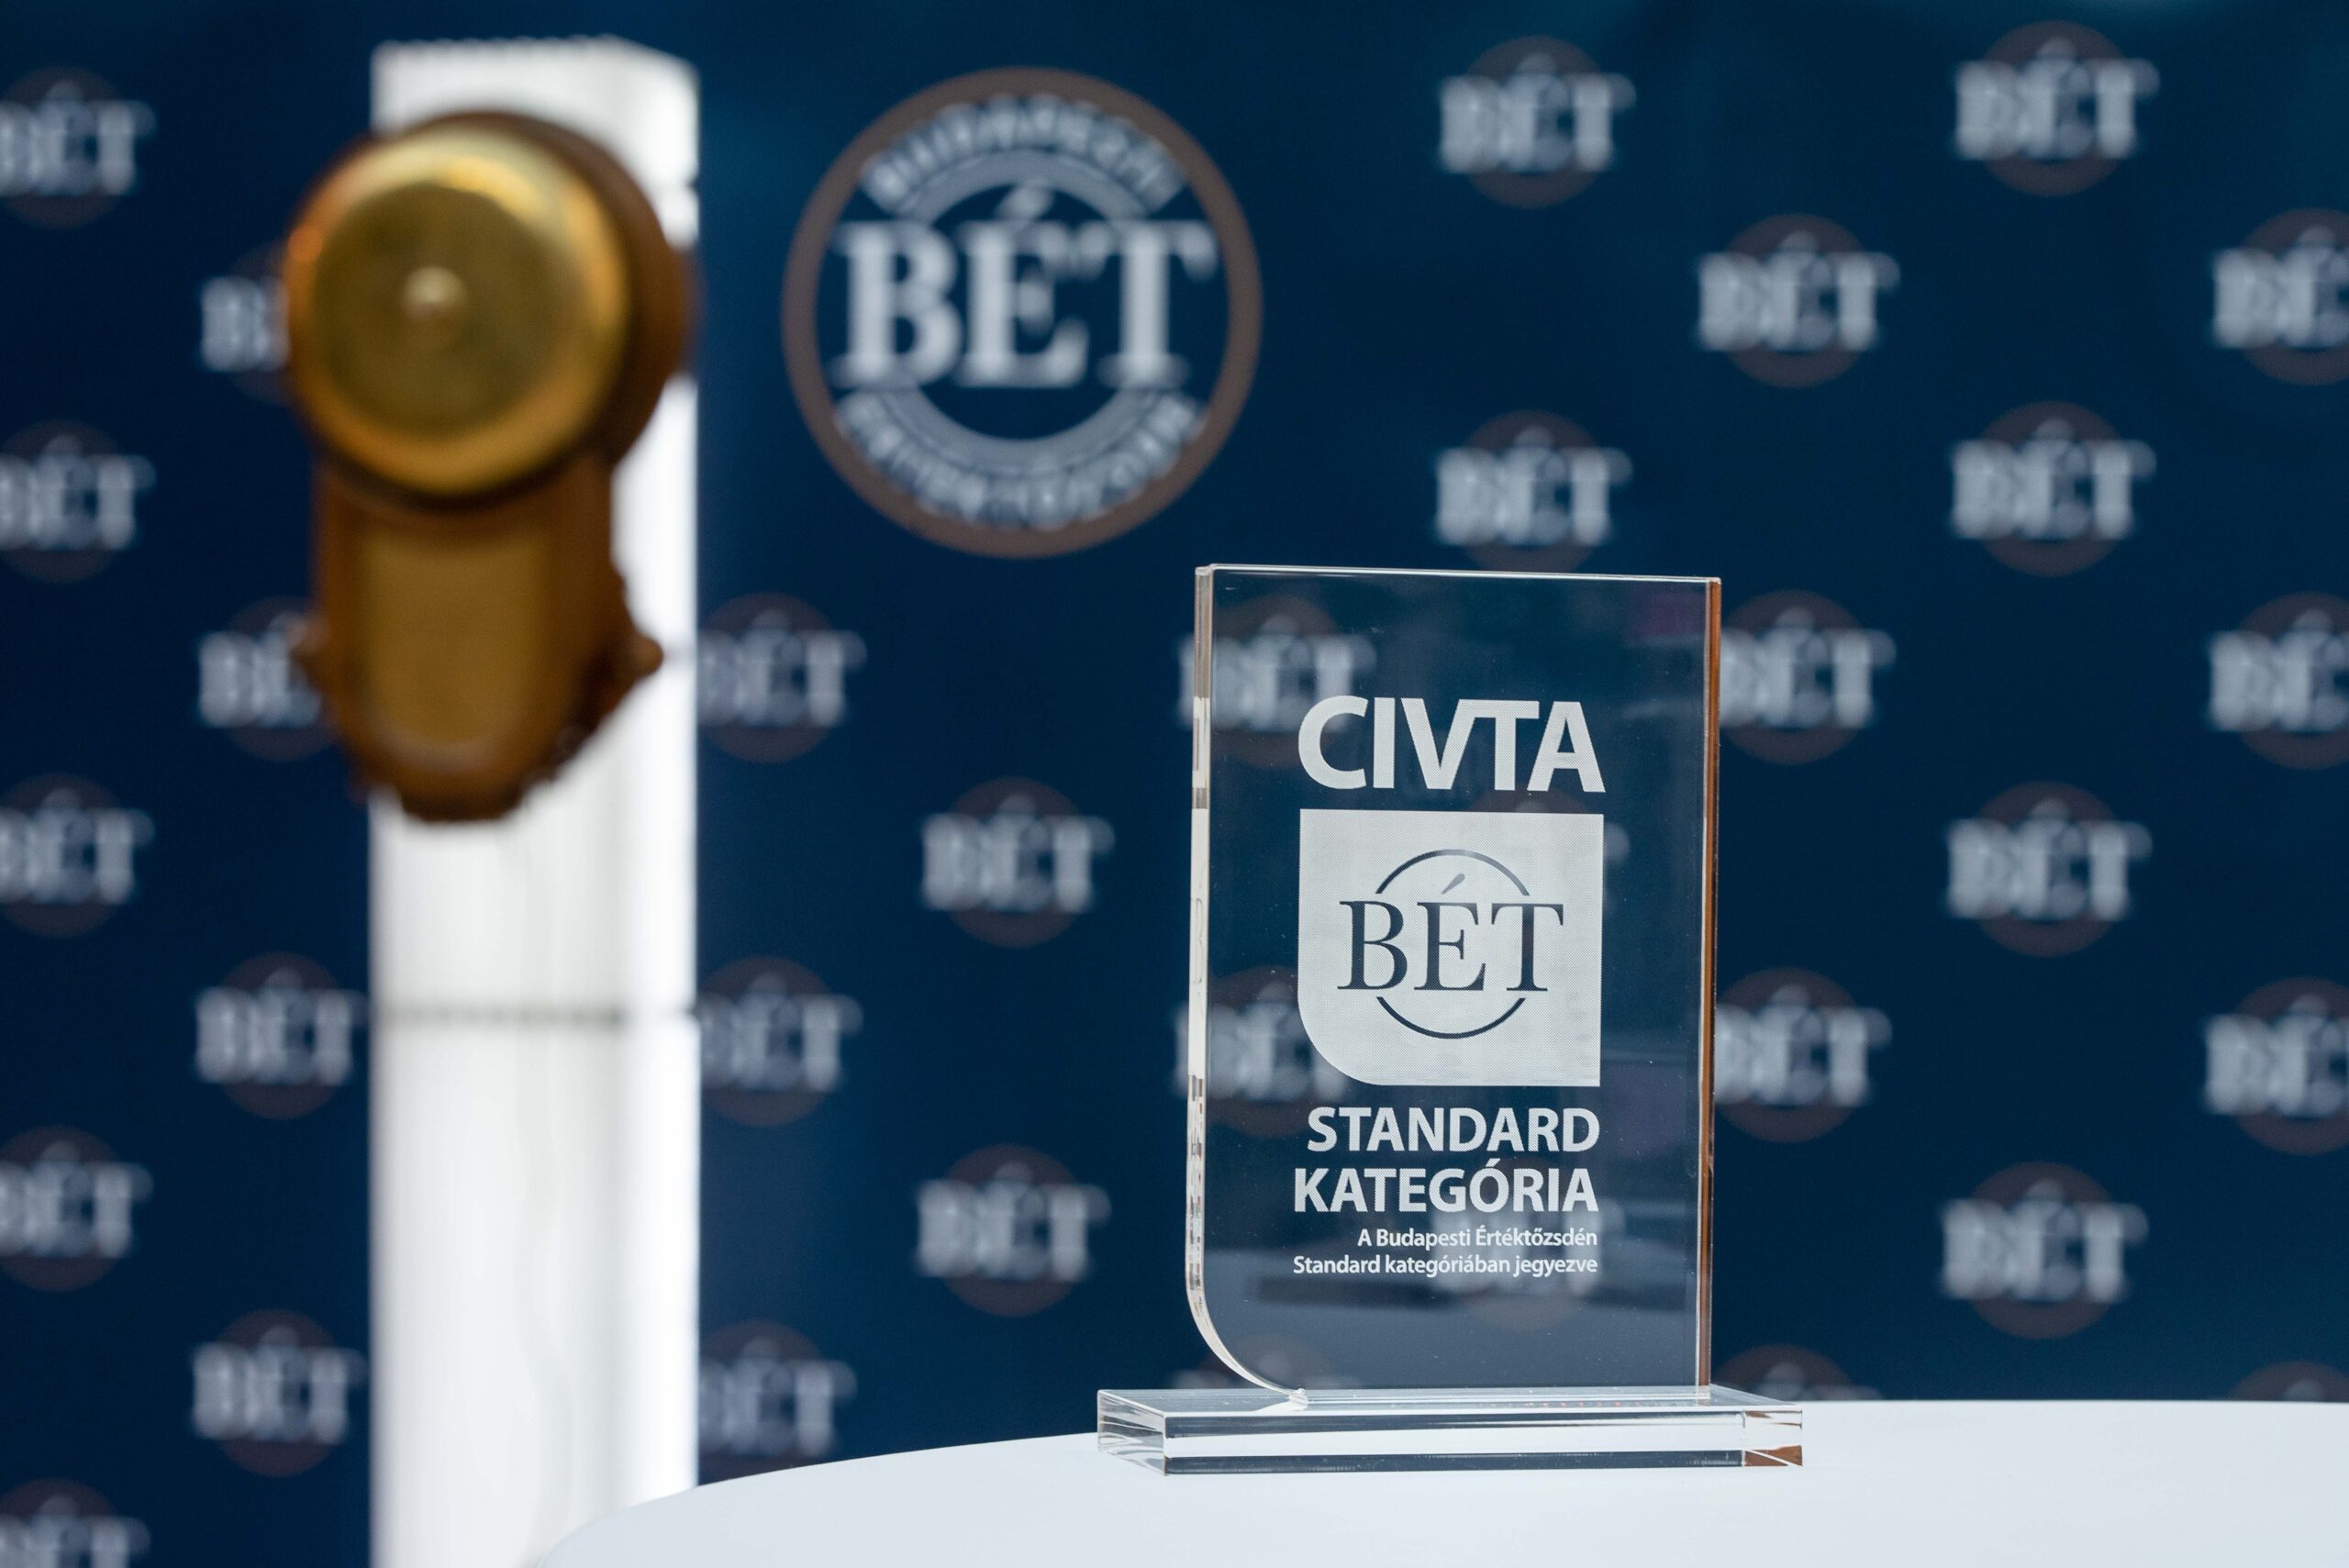 Civita Group - Gang aufs Börsenparkett / Civita Group has been added on the Budapest Stock Exchange